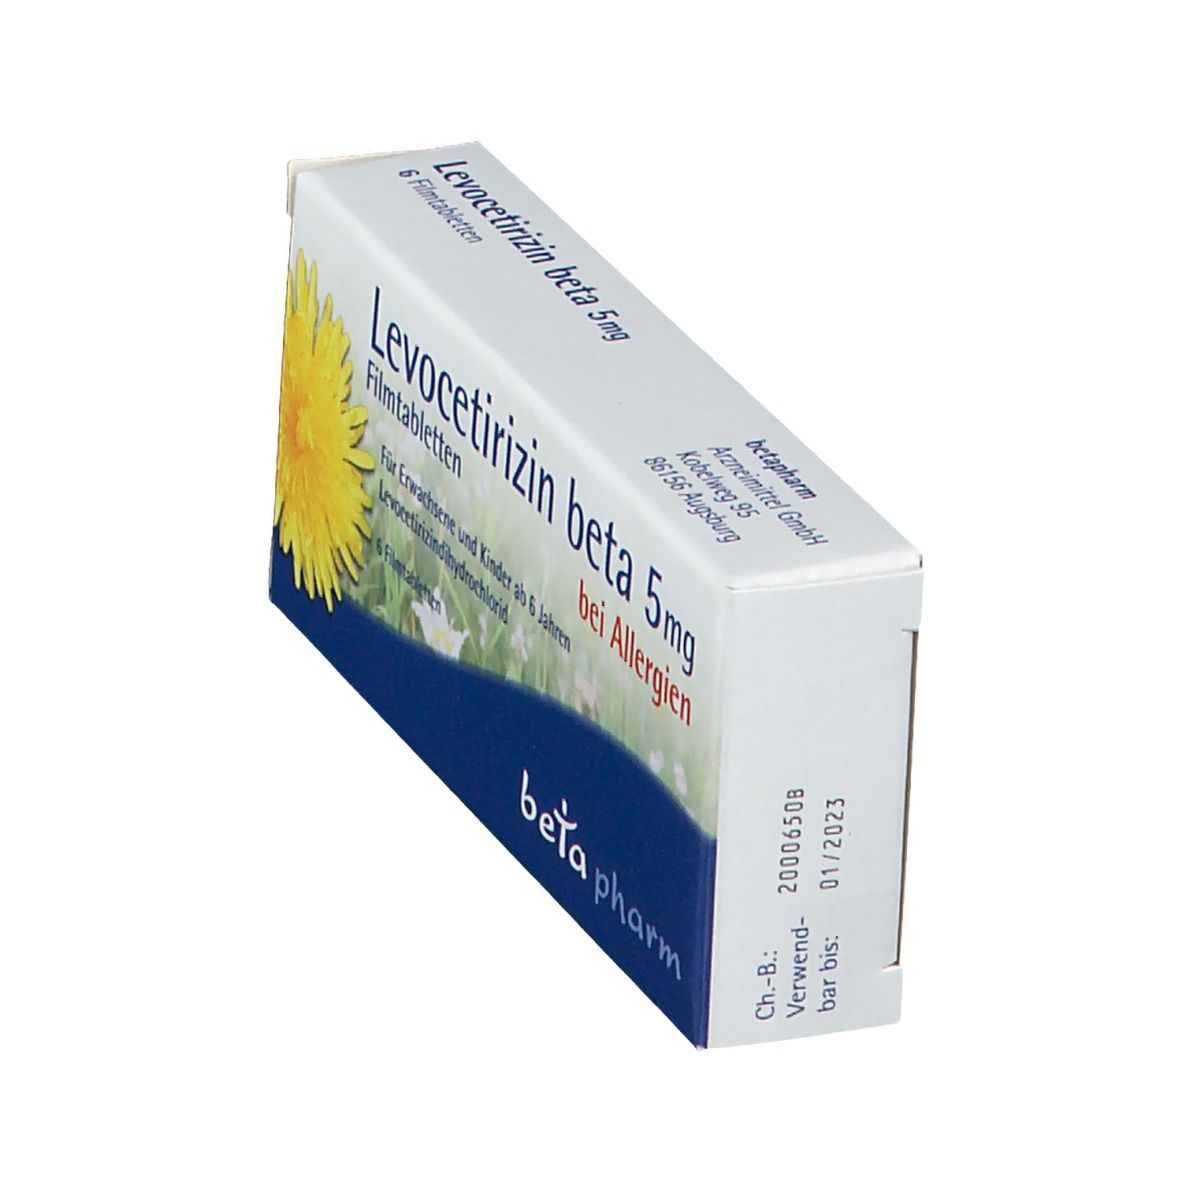 Levocetirizin beta 5 mg